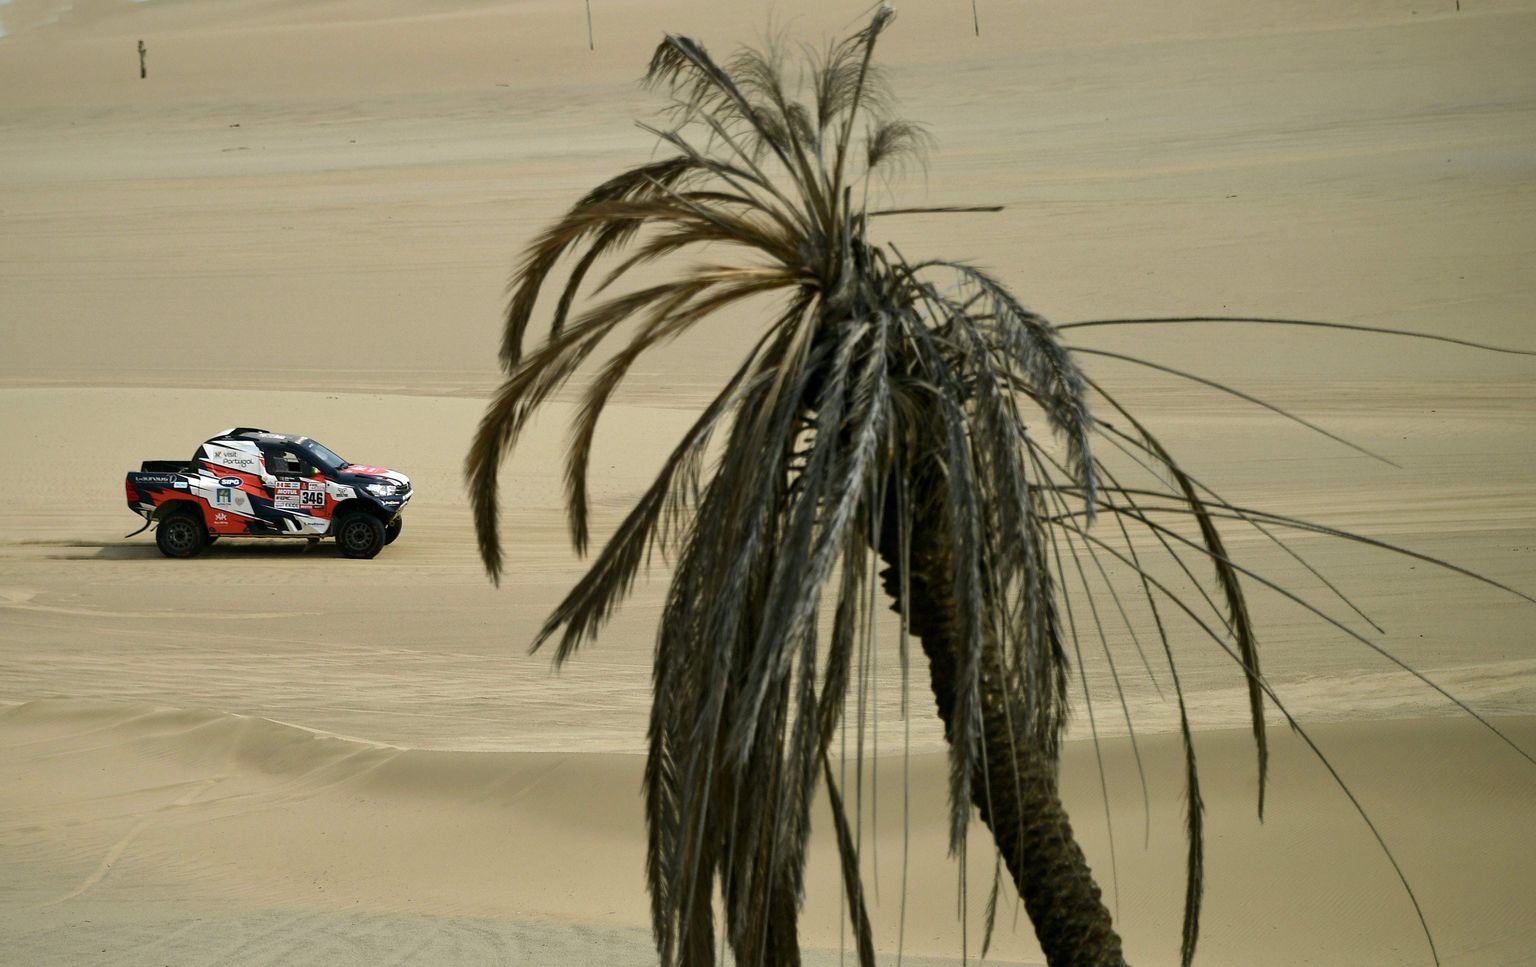 Andre Villas-Boas läbis Dakari rallil enne katkestamist kolm etappi.